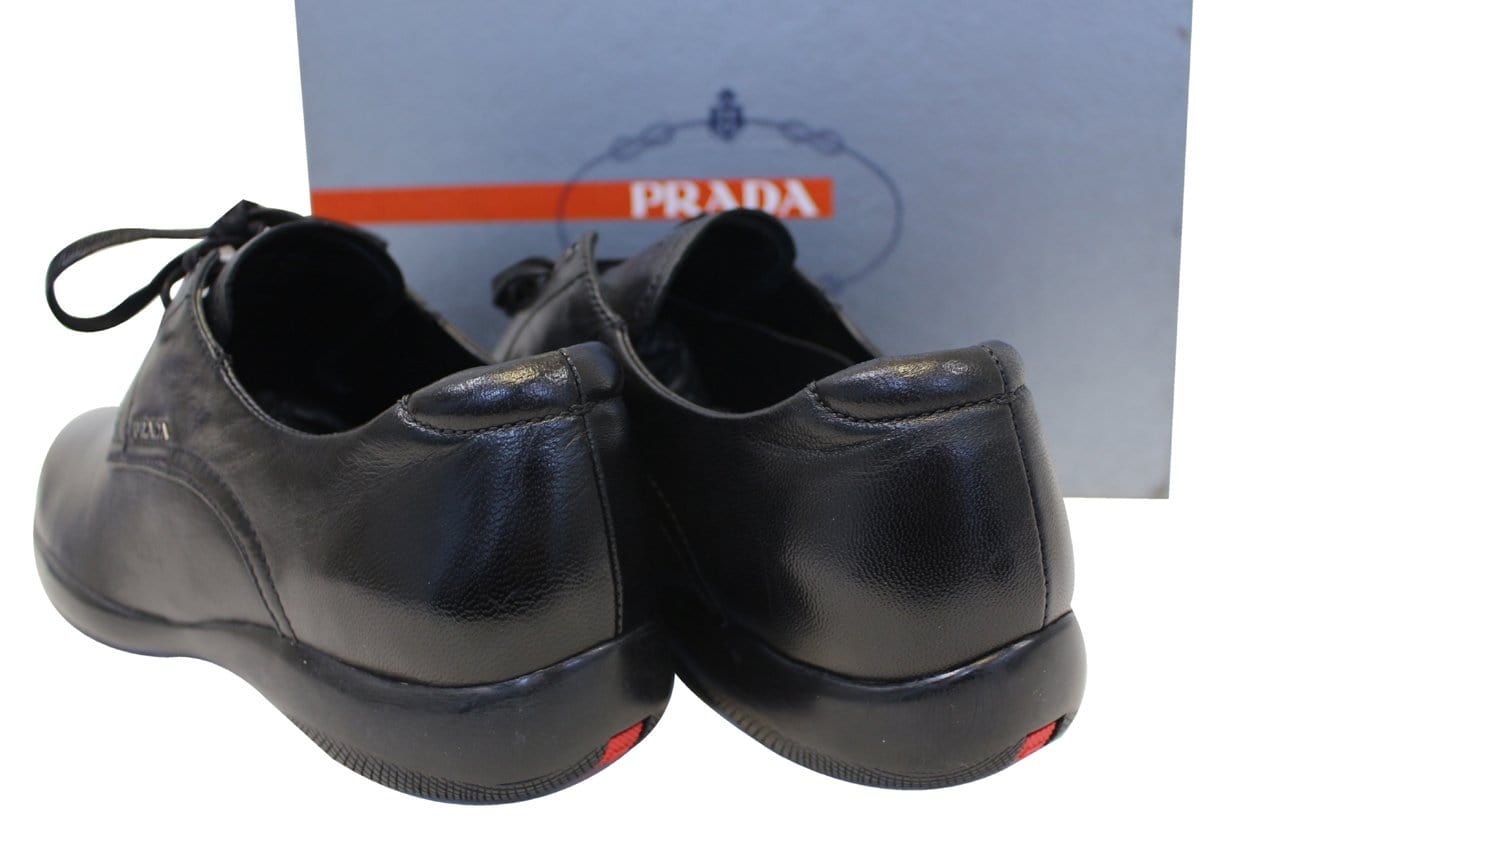 Prada Women's Sneakers | Prada Lace-Up Women Shoes on Sale